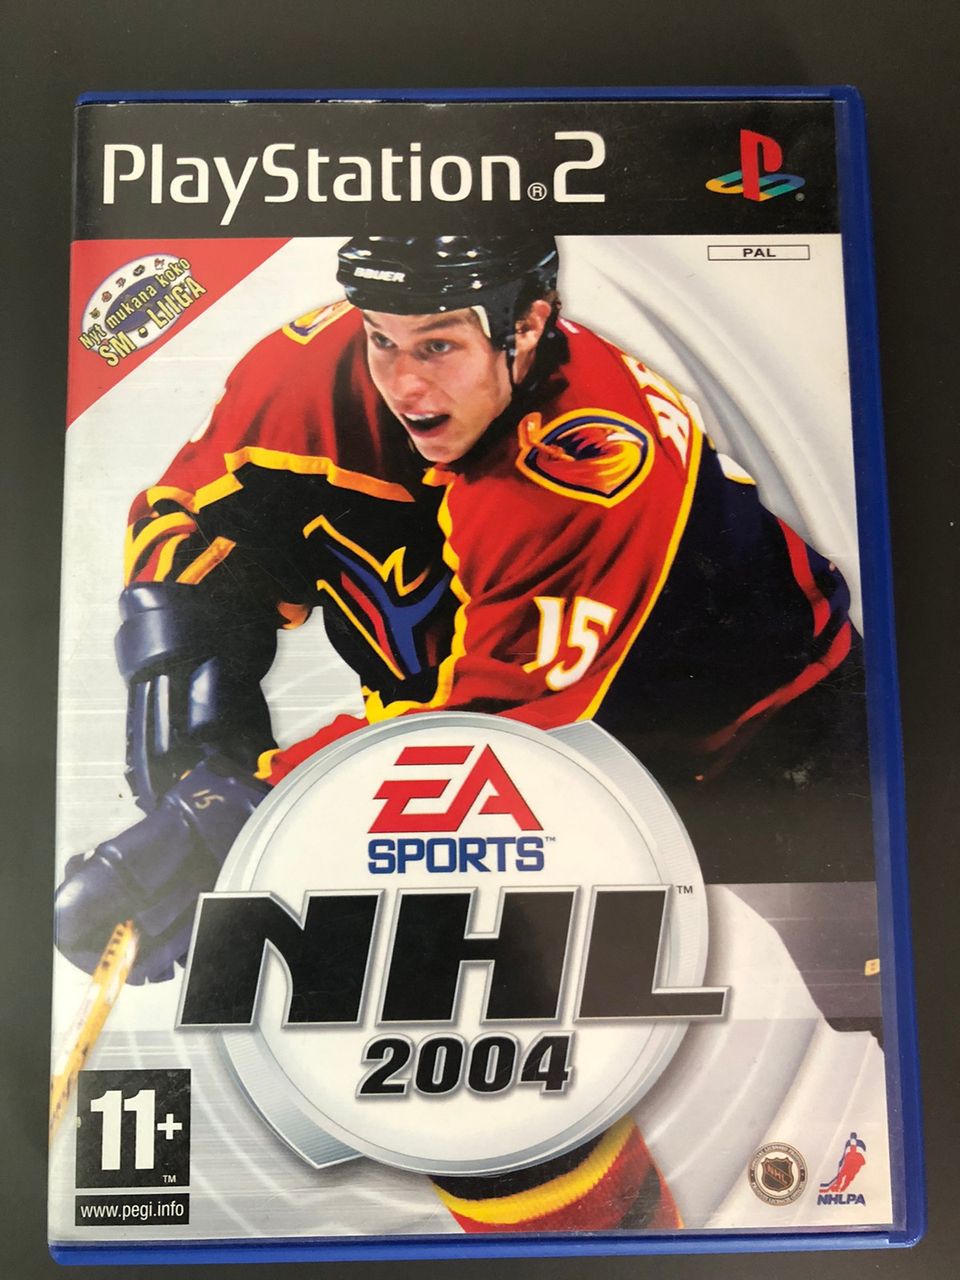 NHL 2004 PS2